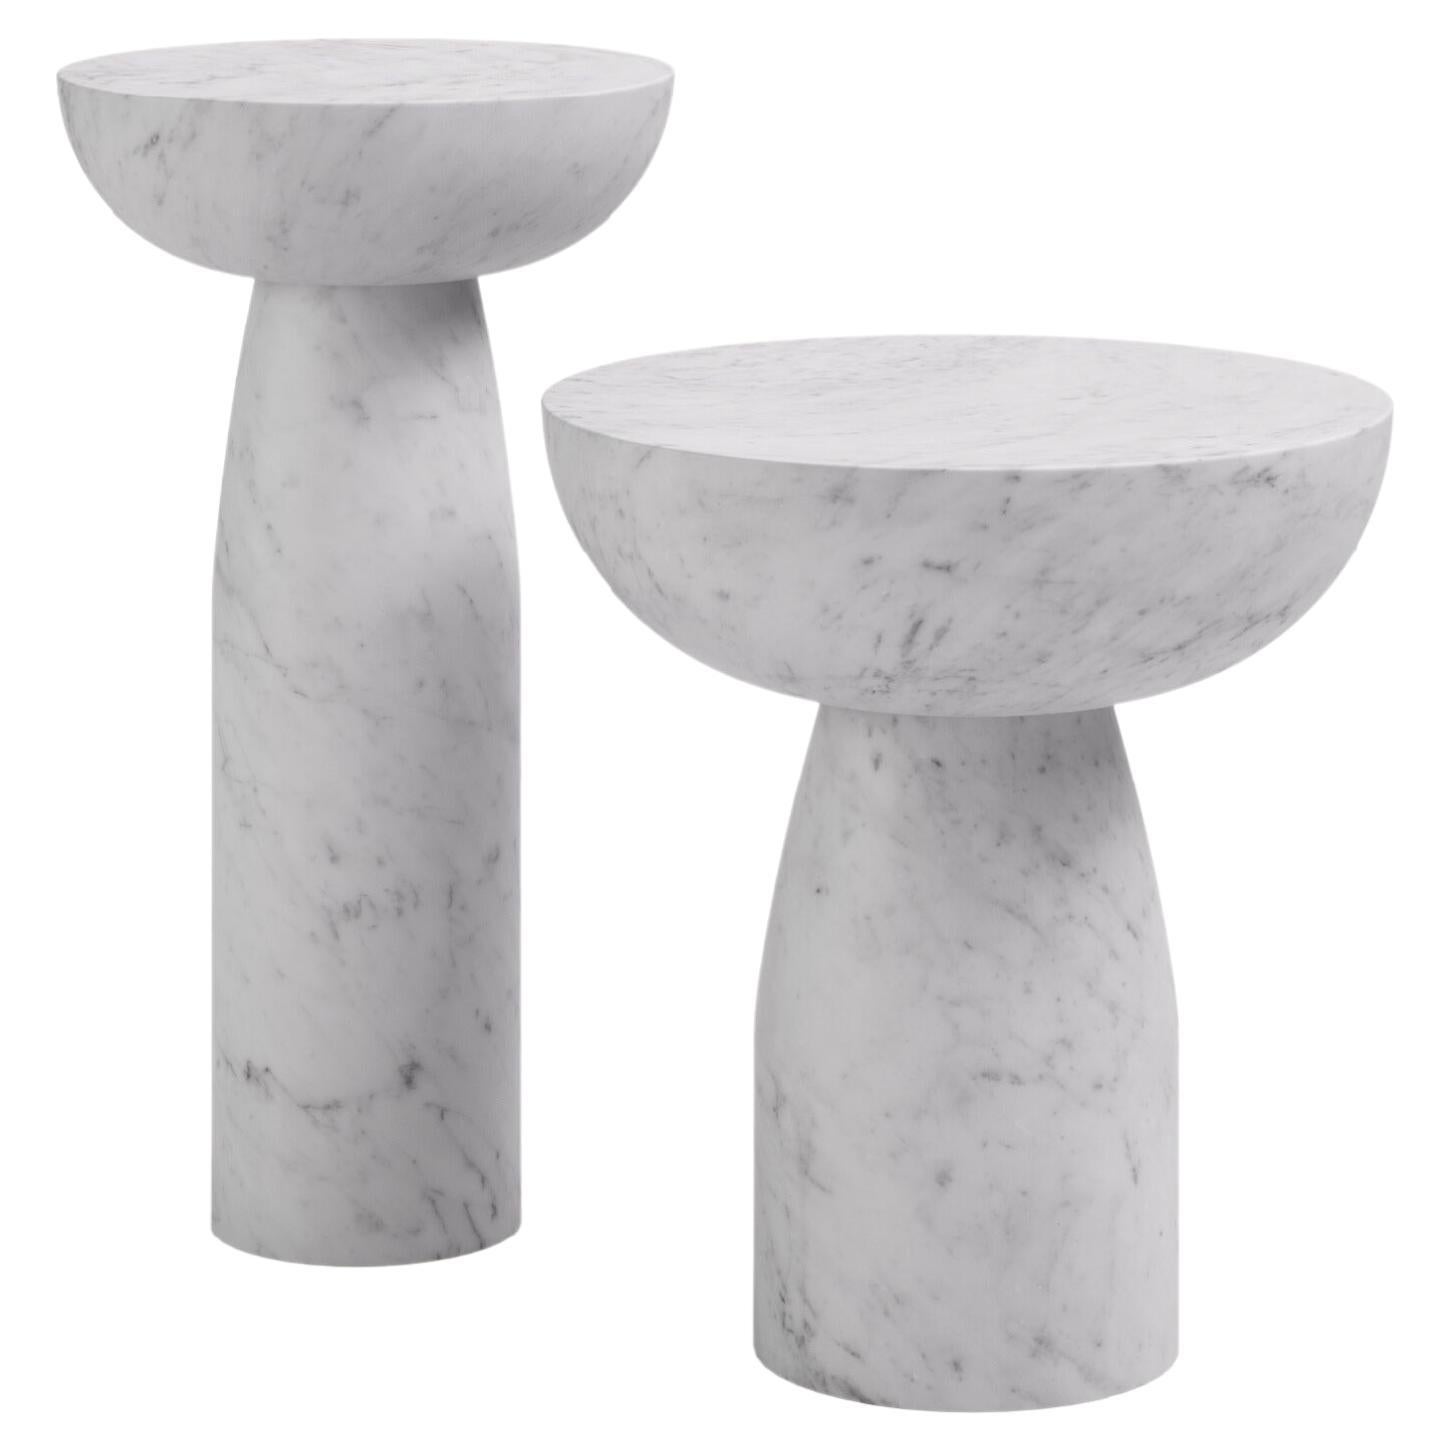 FORM(LA) Sfera Round Side Table 18”L x 18”W x 20”H Carrara Bianco Marble For Sale